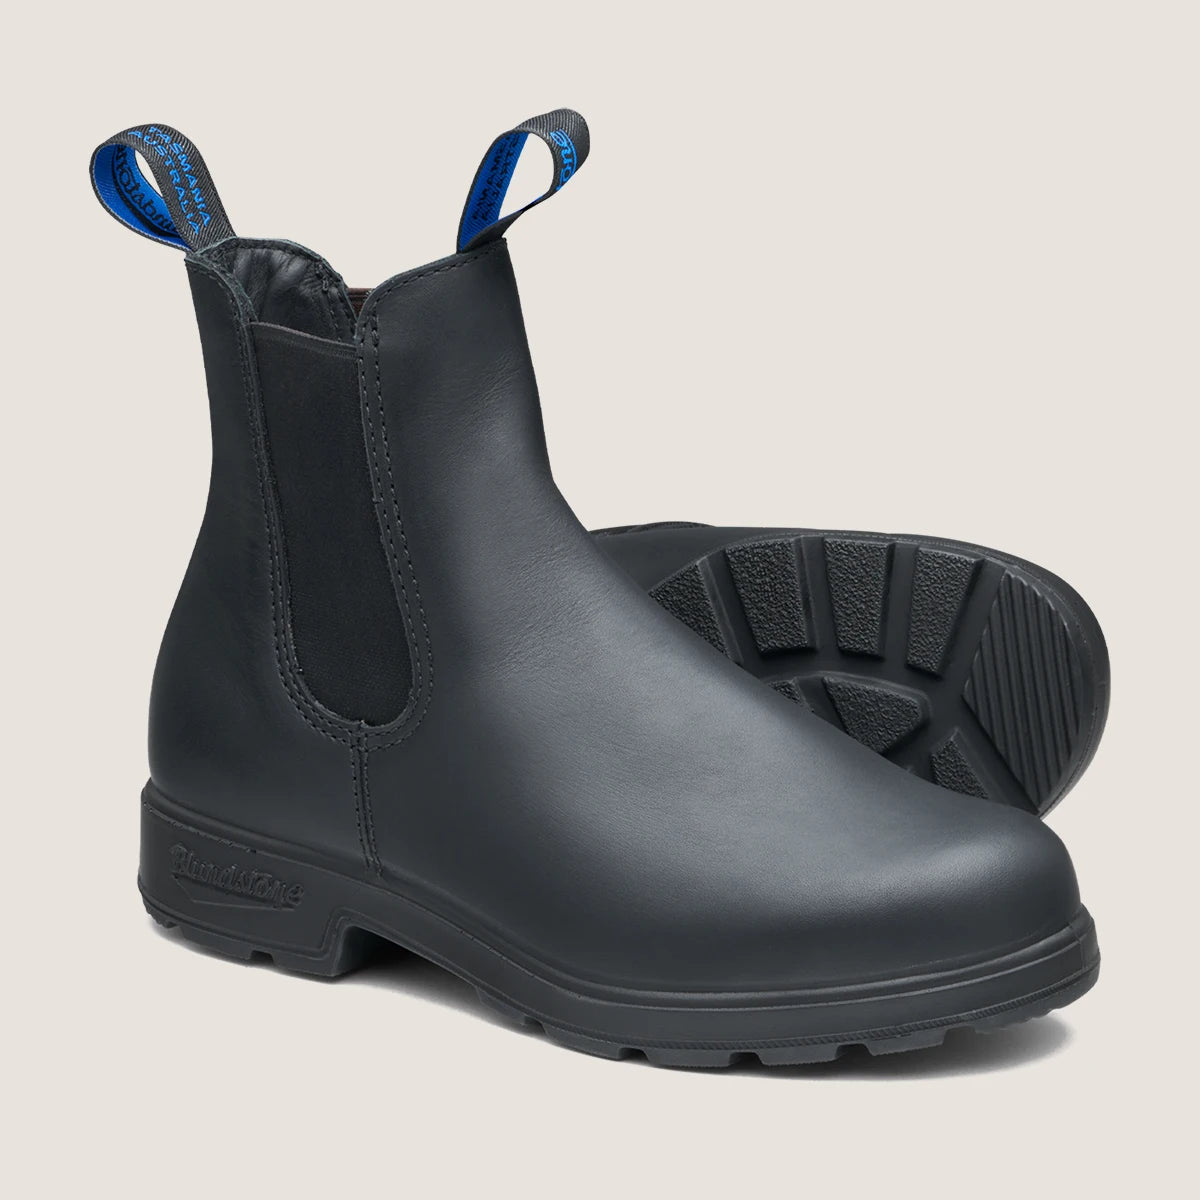 Blundstone - 2274 Women's Waterproof Thermal High Top Boot, Black Leather